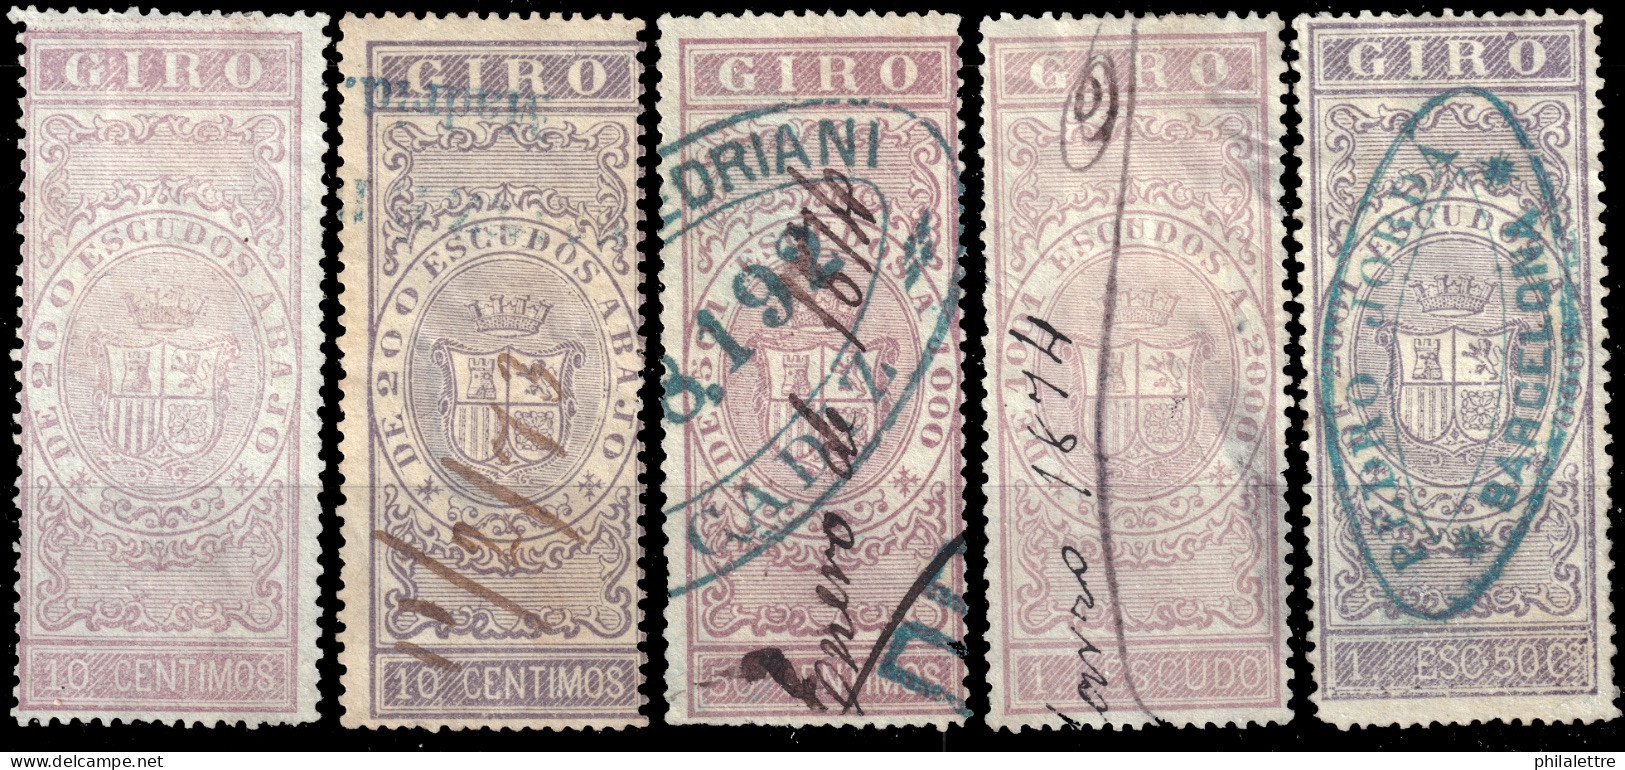 ESPAGNE / ESPANA / SPAIN - 1870 - SELLOS PARA GIRO 10c Sin Goma, 10c, 50c, 1Esc. & 1,50Esc.uso Fiscal Ed.43, 43a, 44/46 - Fiscali